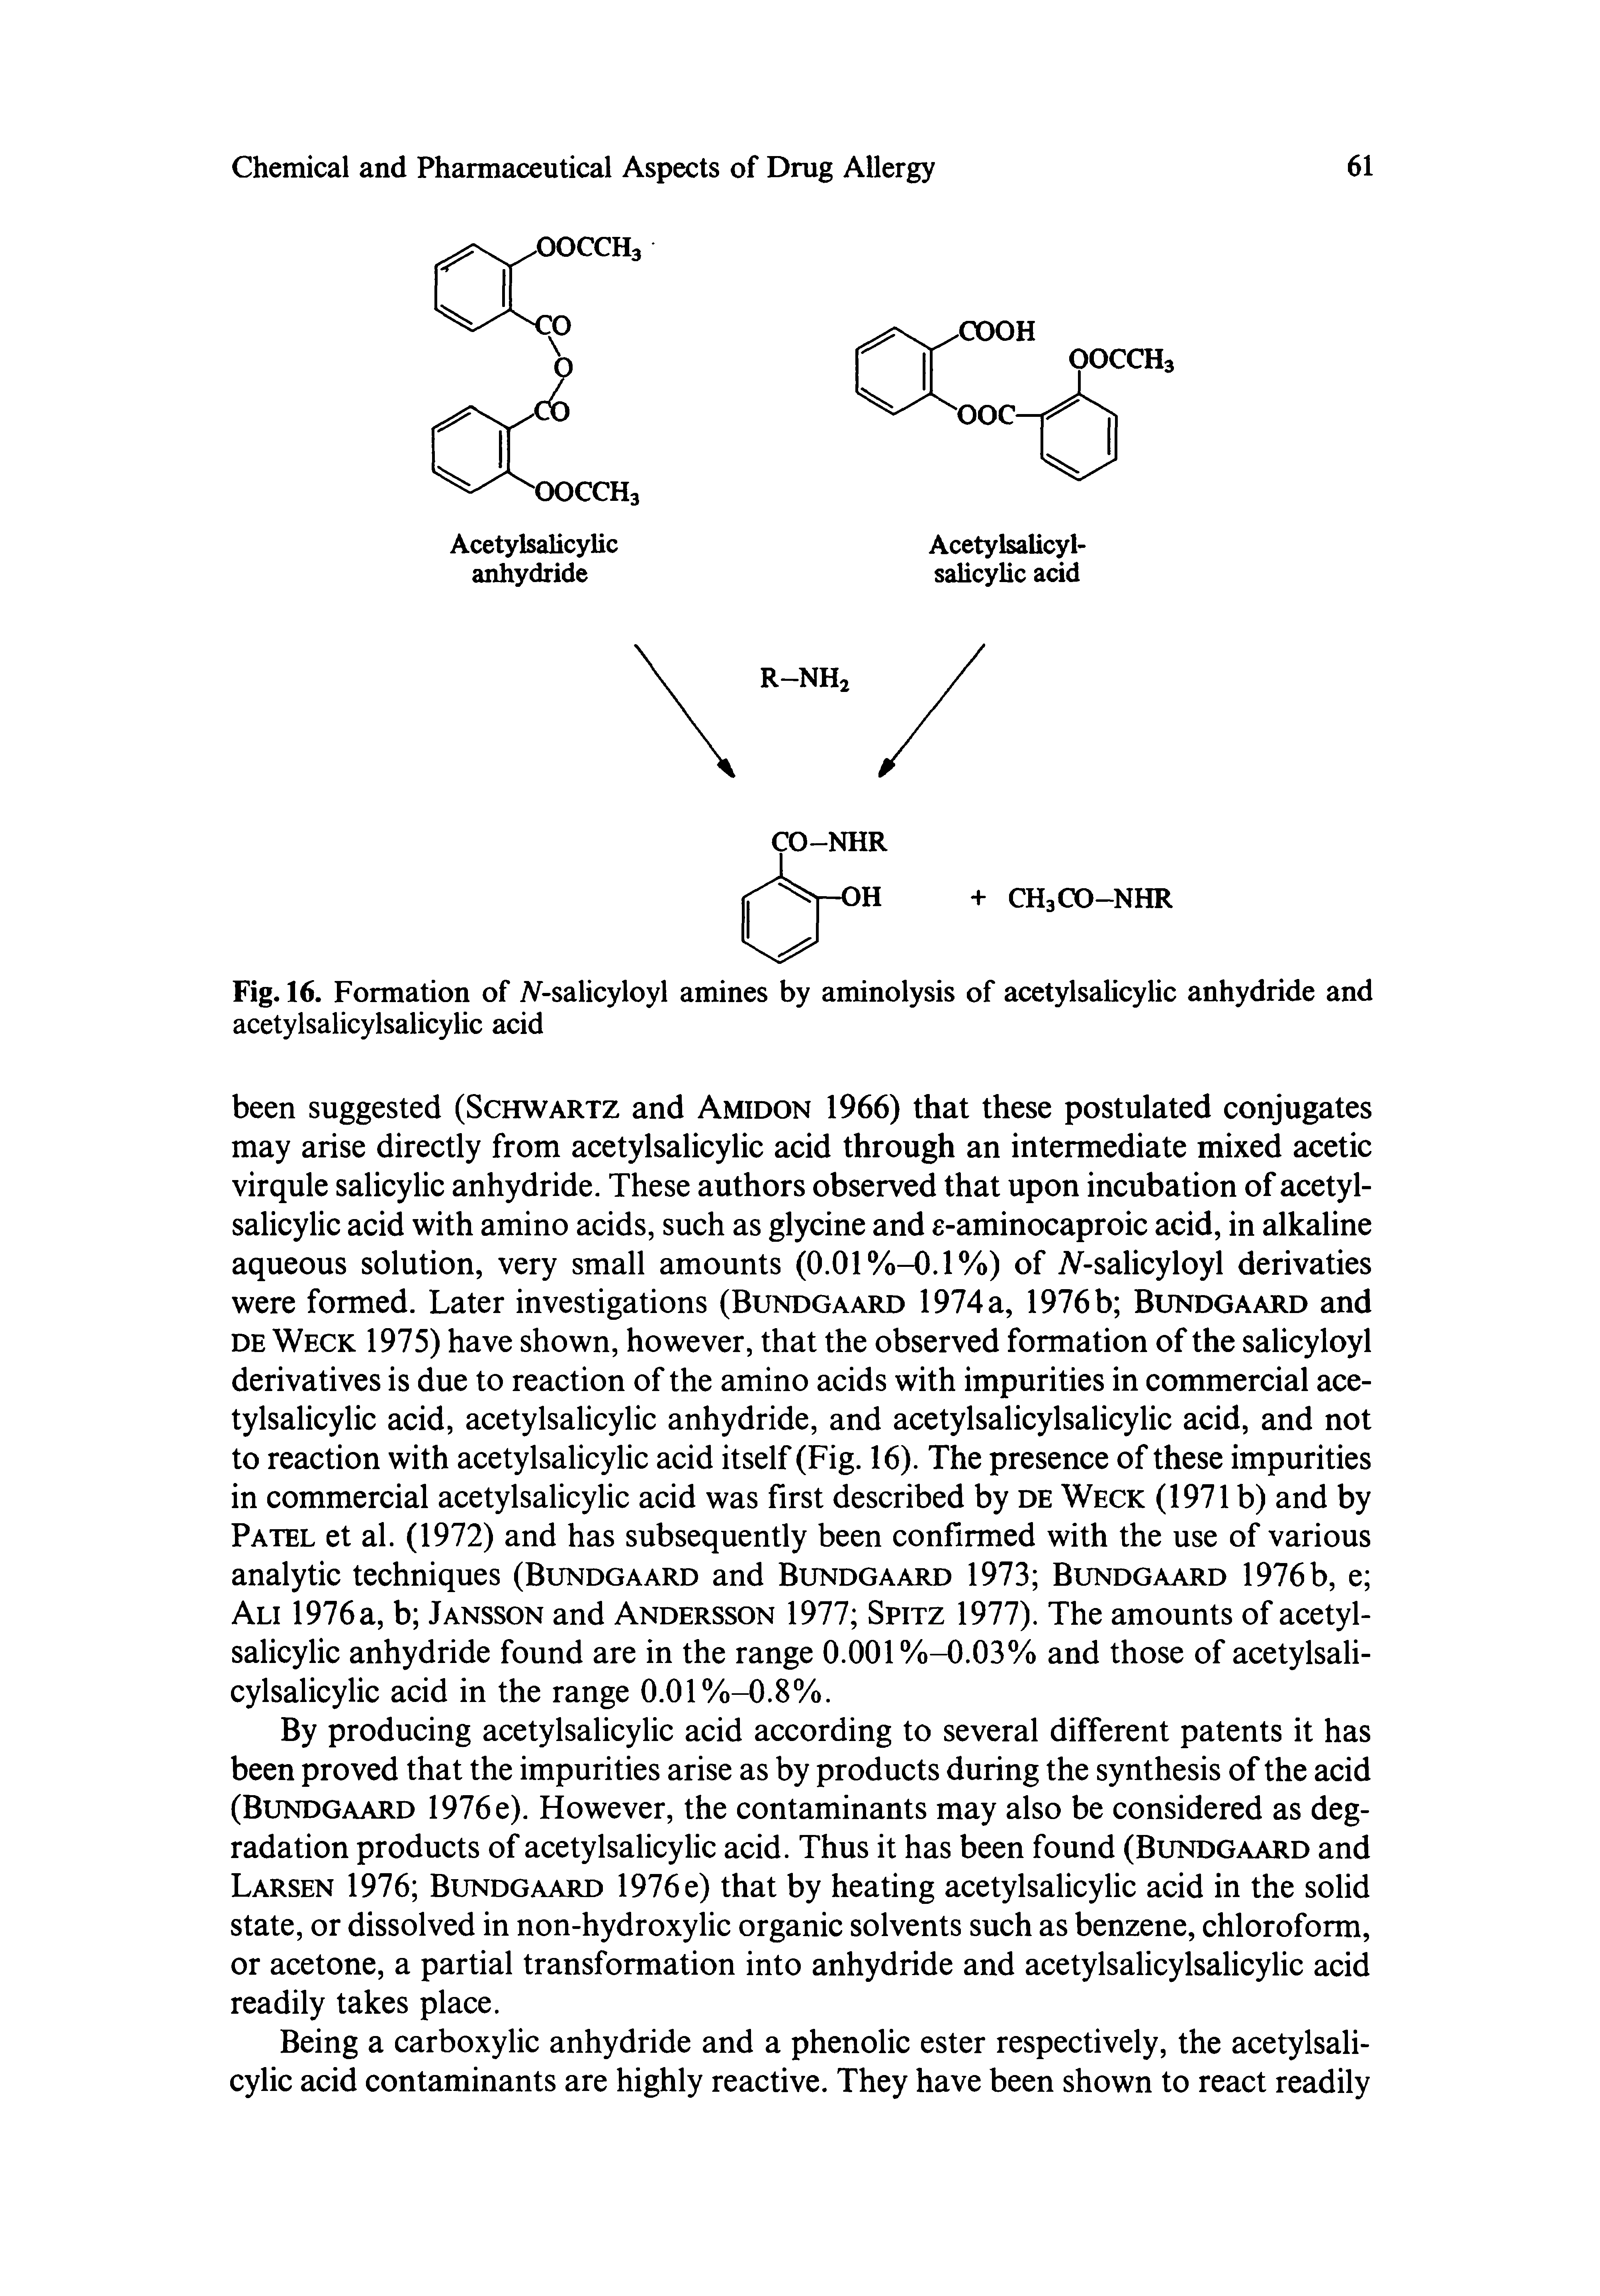 Fig. 16. Formation of AT-salicyloyl amines by aminolysis of acetylsalicylic anhydride and acetylsalicylsalicylic acid...